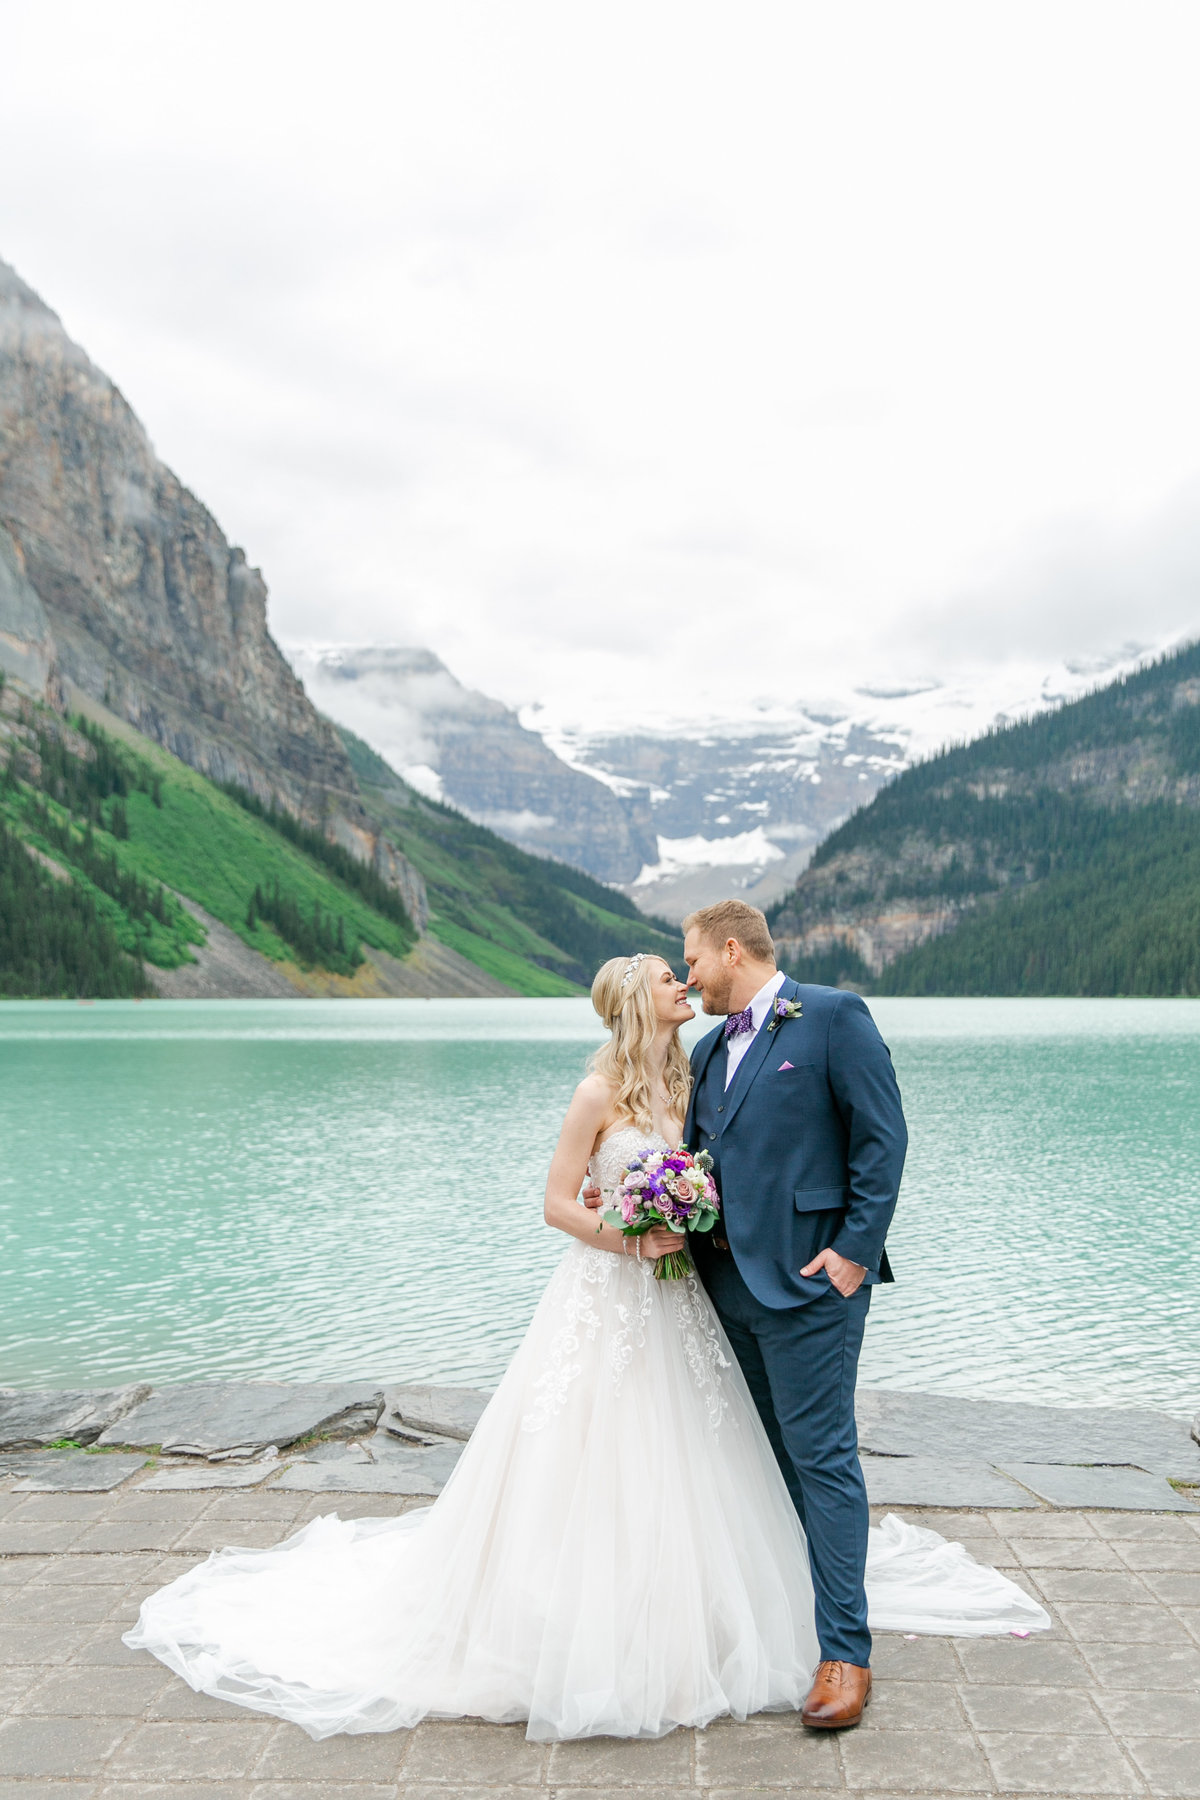 Karlie Colleen Photography - Fairmont Chateau Lake Louise Wedding - Banff Canada - Sara & Drew Forsberg-422